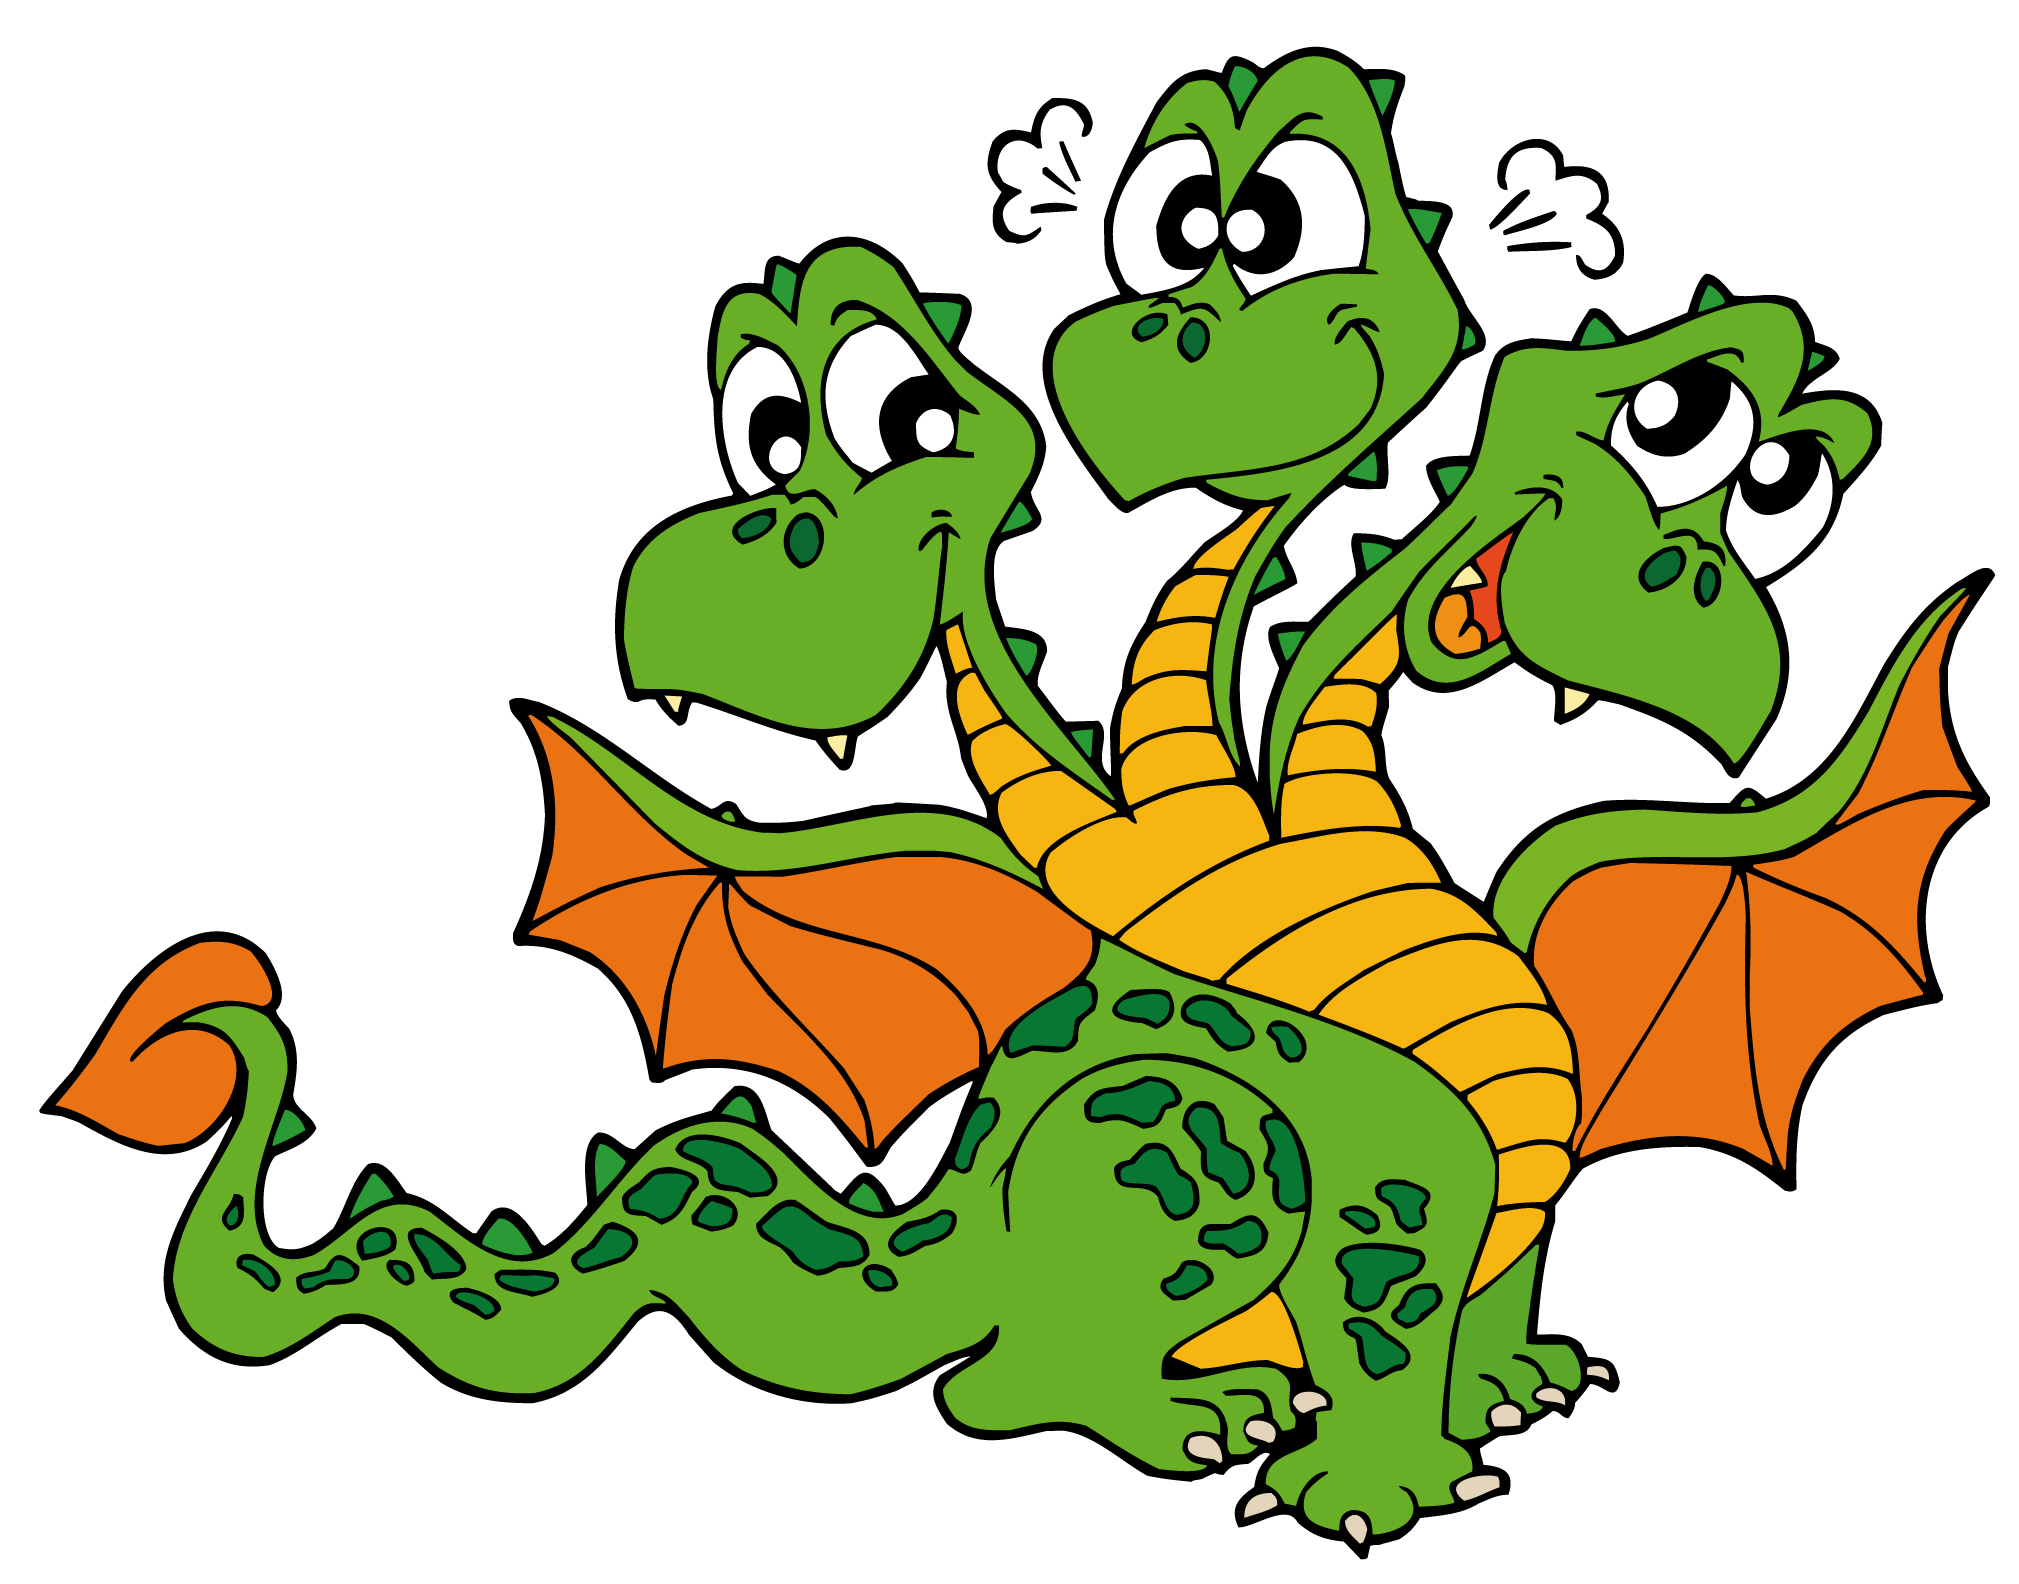 Dragon Cartoon Images - Cliparts.co